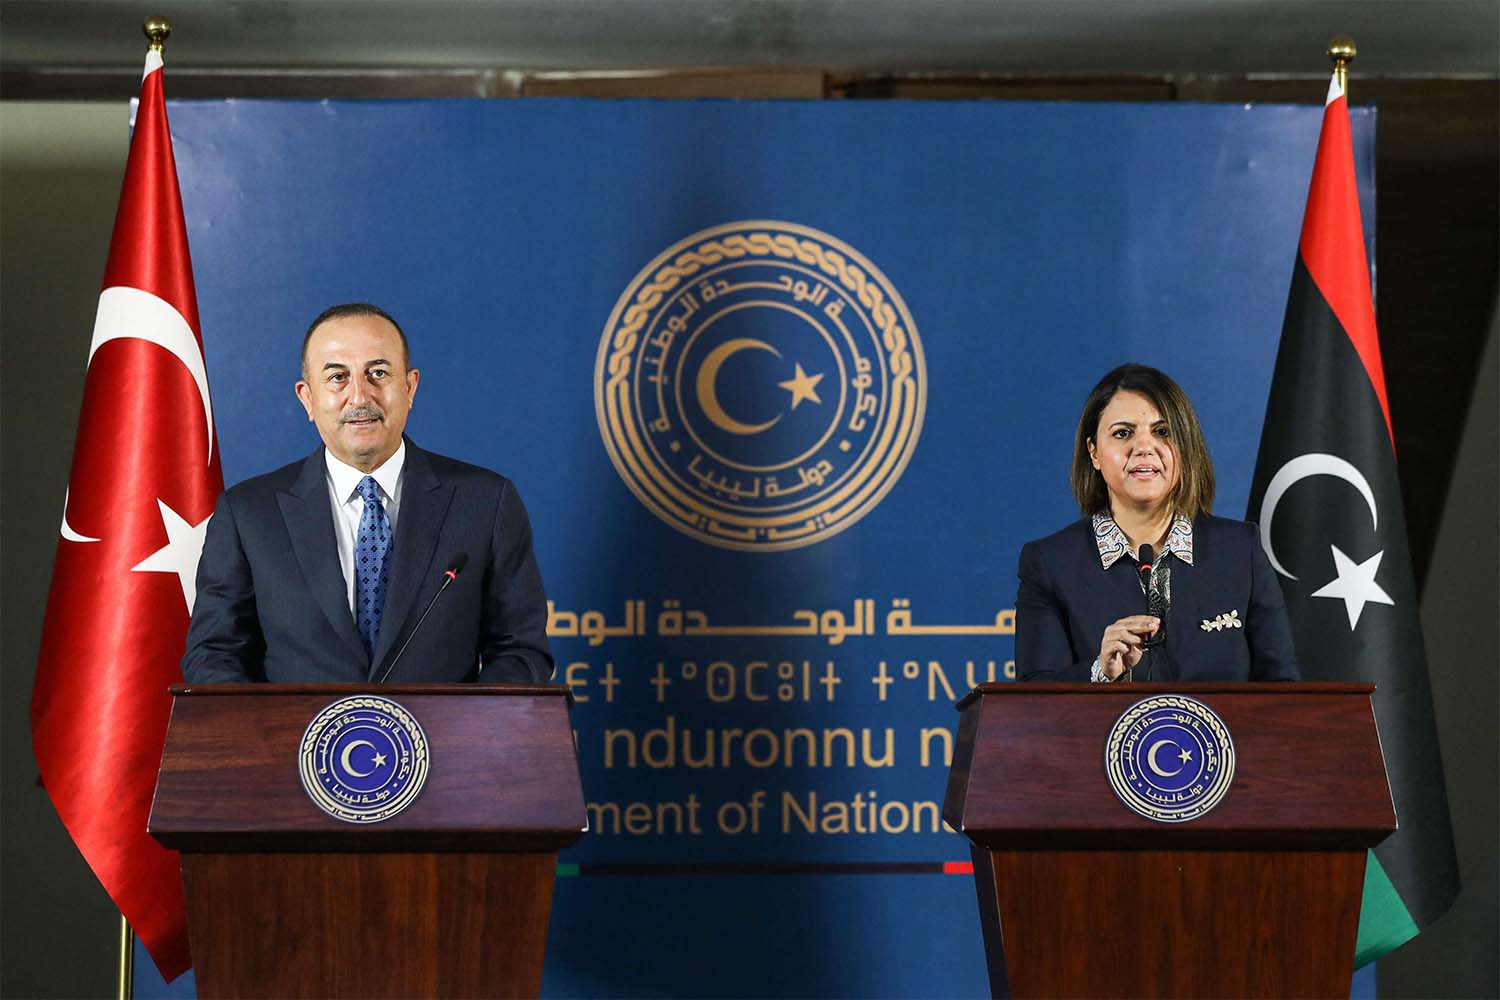 Libya's Foreign Minister Najla al-Manqoush and Turkish counterpart Mevlut Cavusoglu